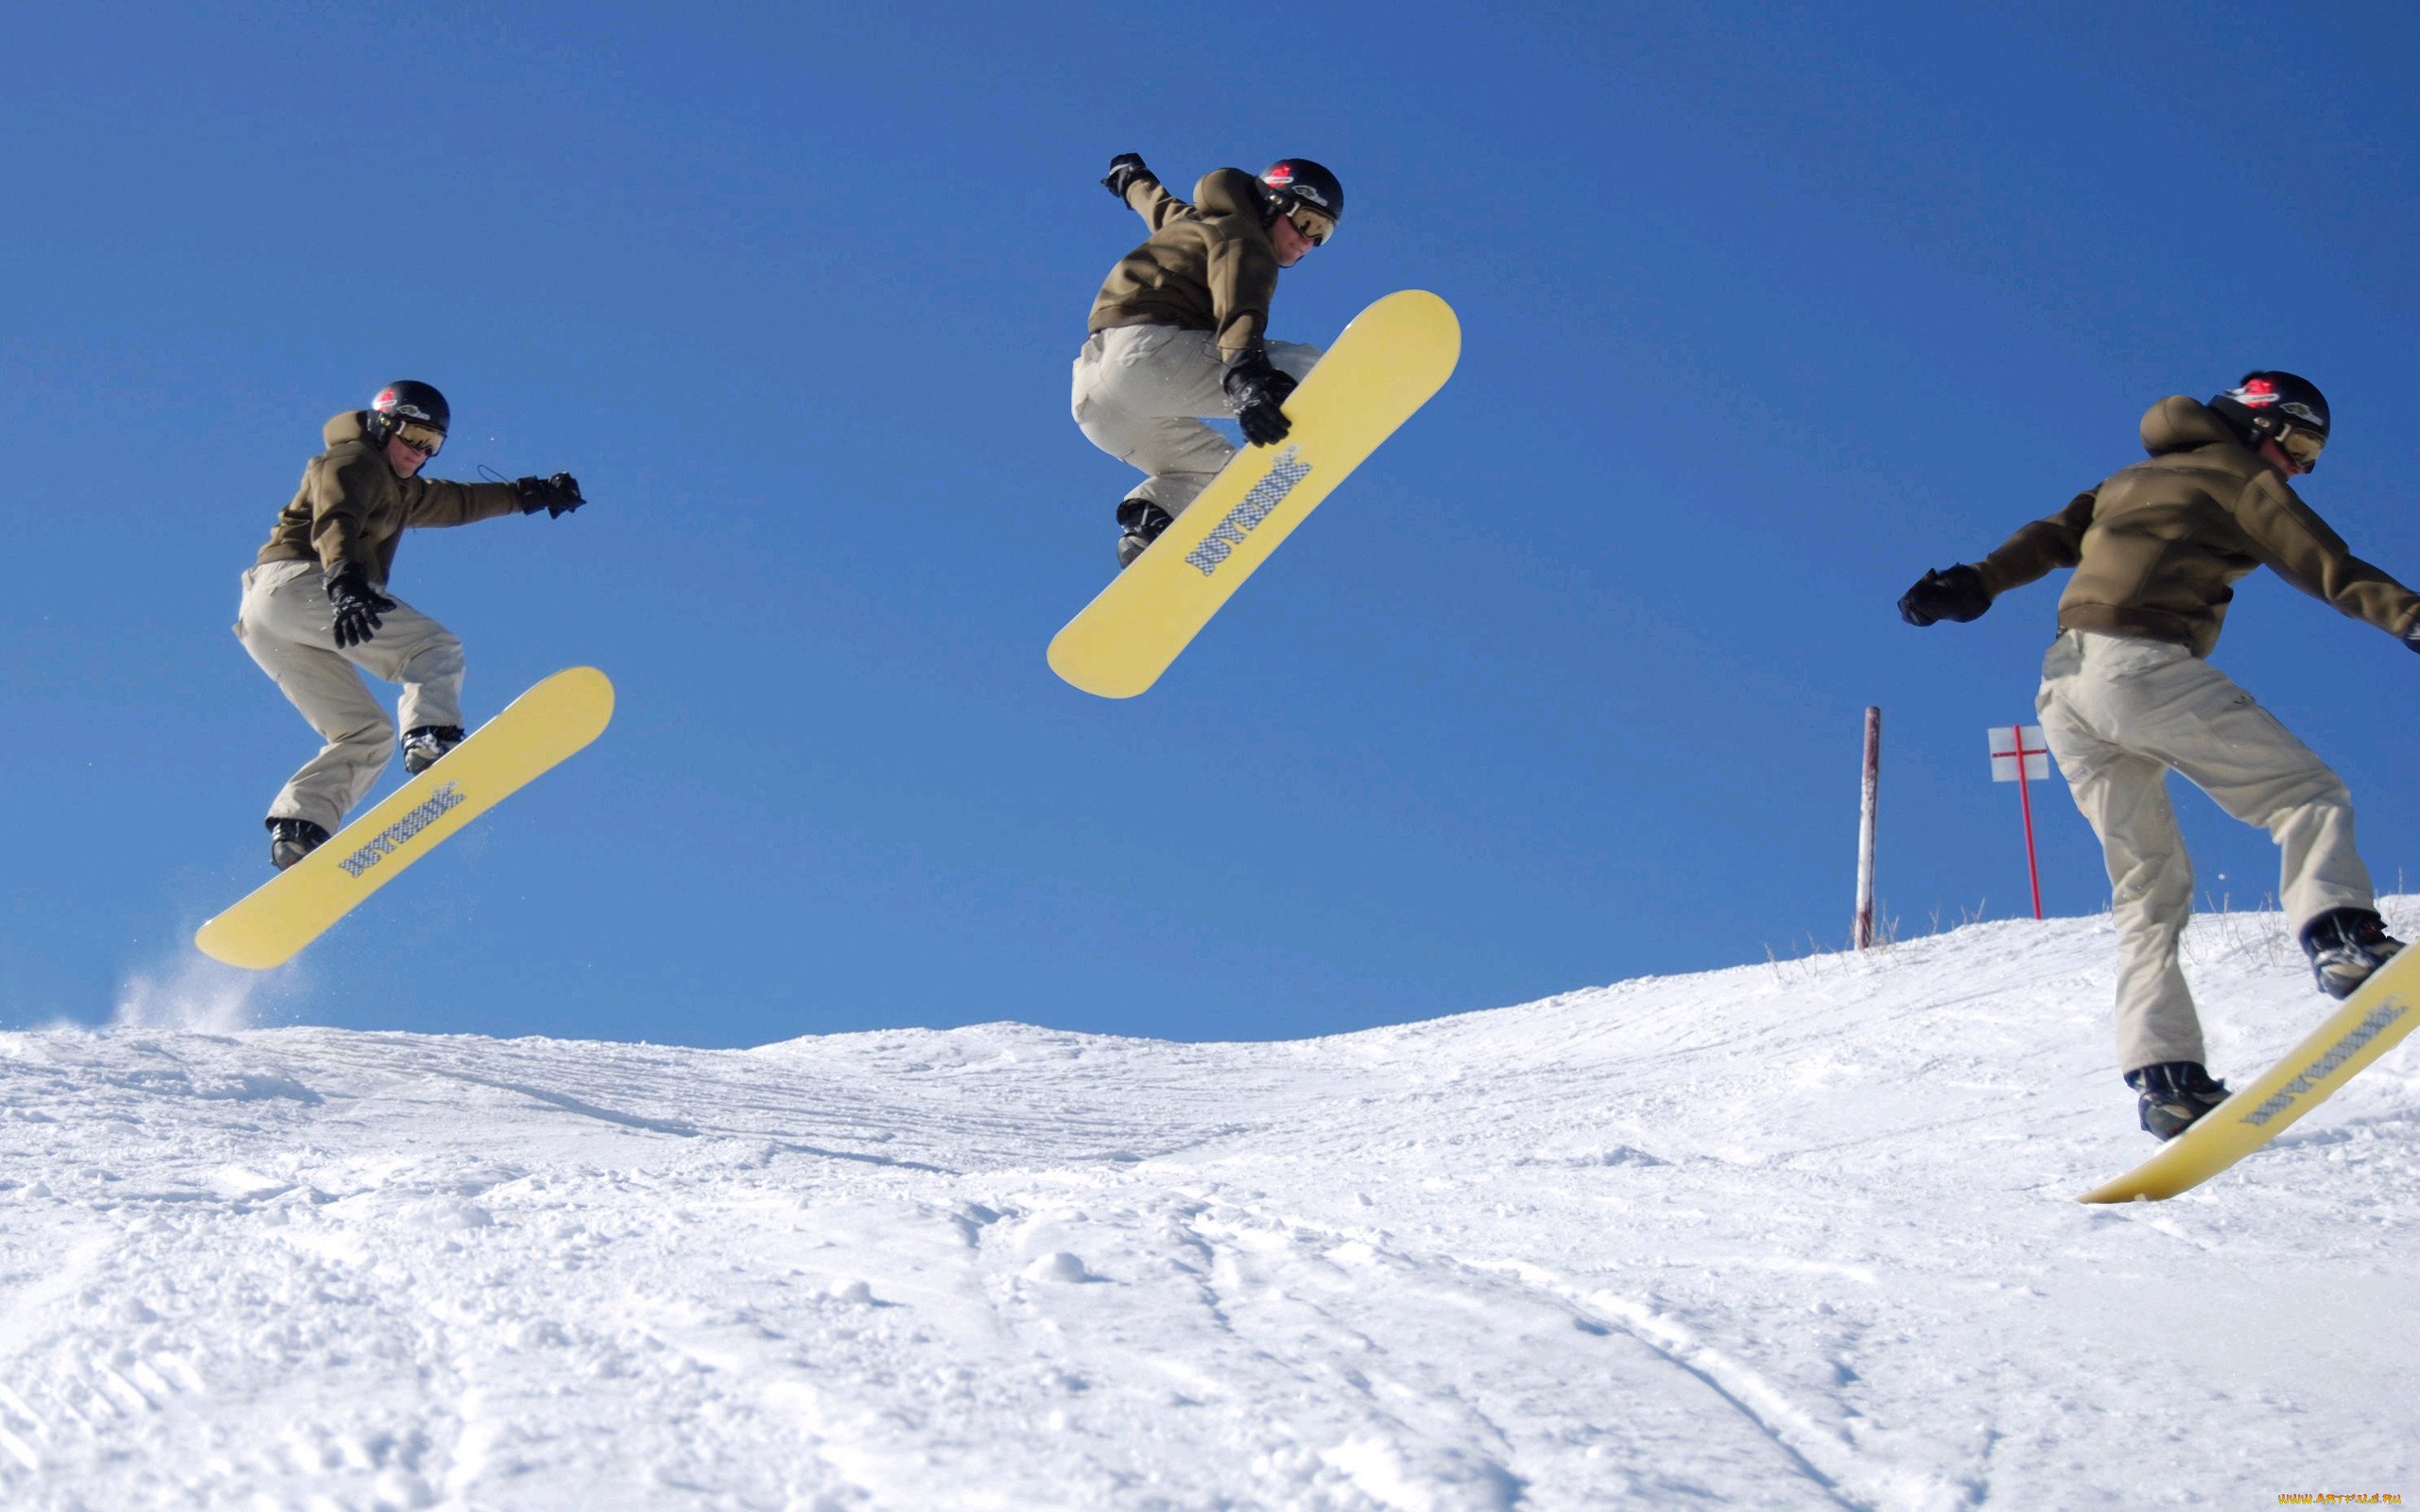 Go snowboarding